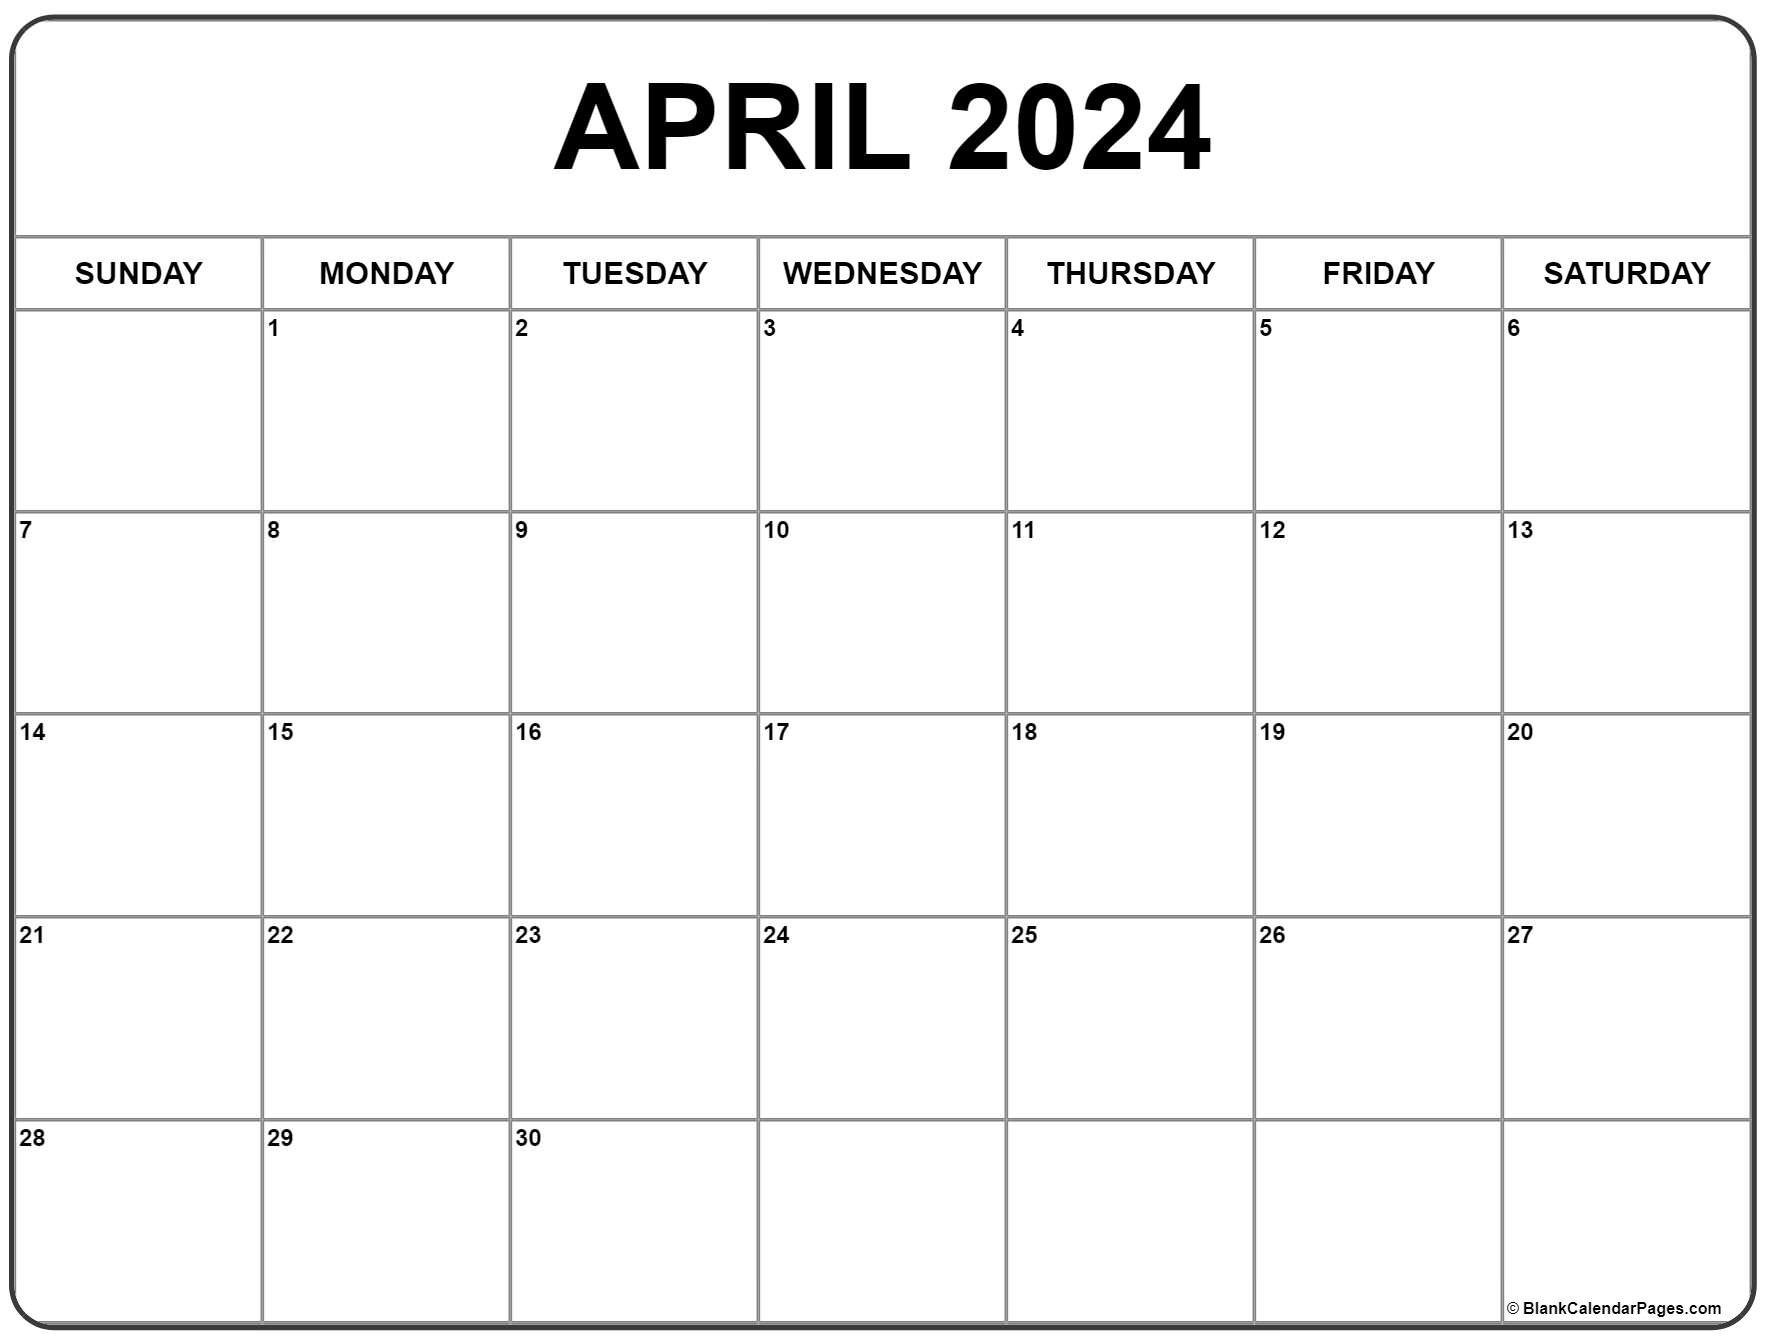 April 2024 Calendar | Free Printable Calendar for Printable Calendar 2024 April